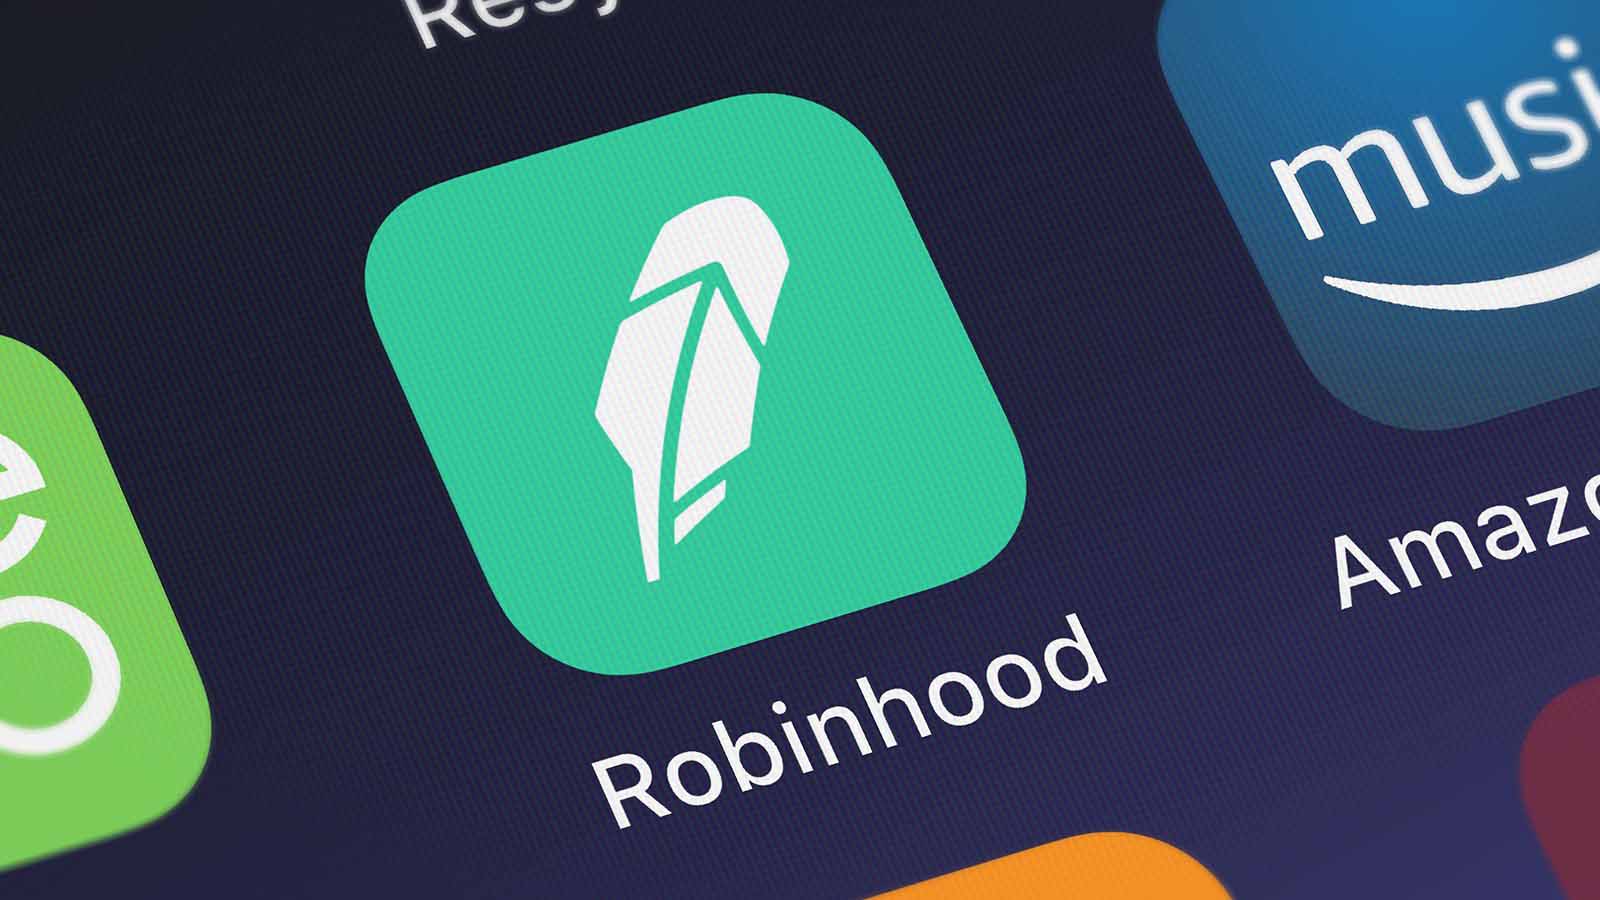 Robinhood mobile app logo is displayed on a smartphone screen hood stock